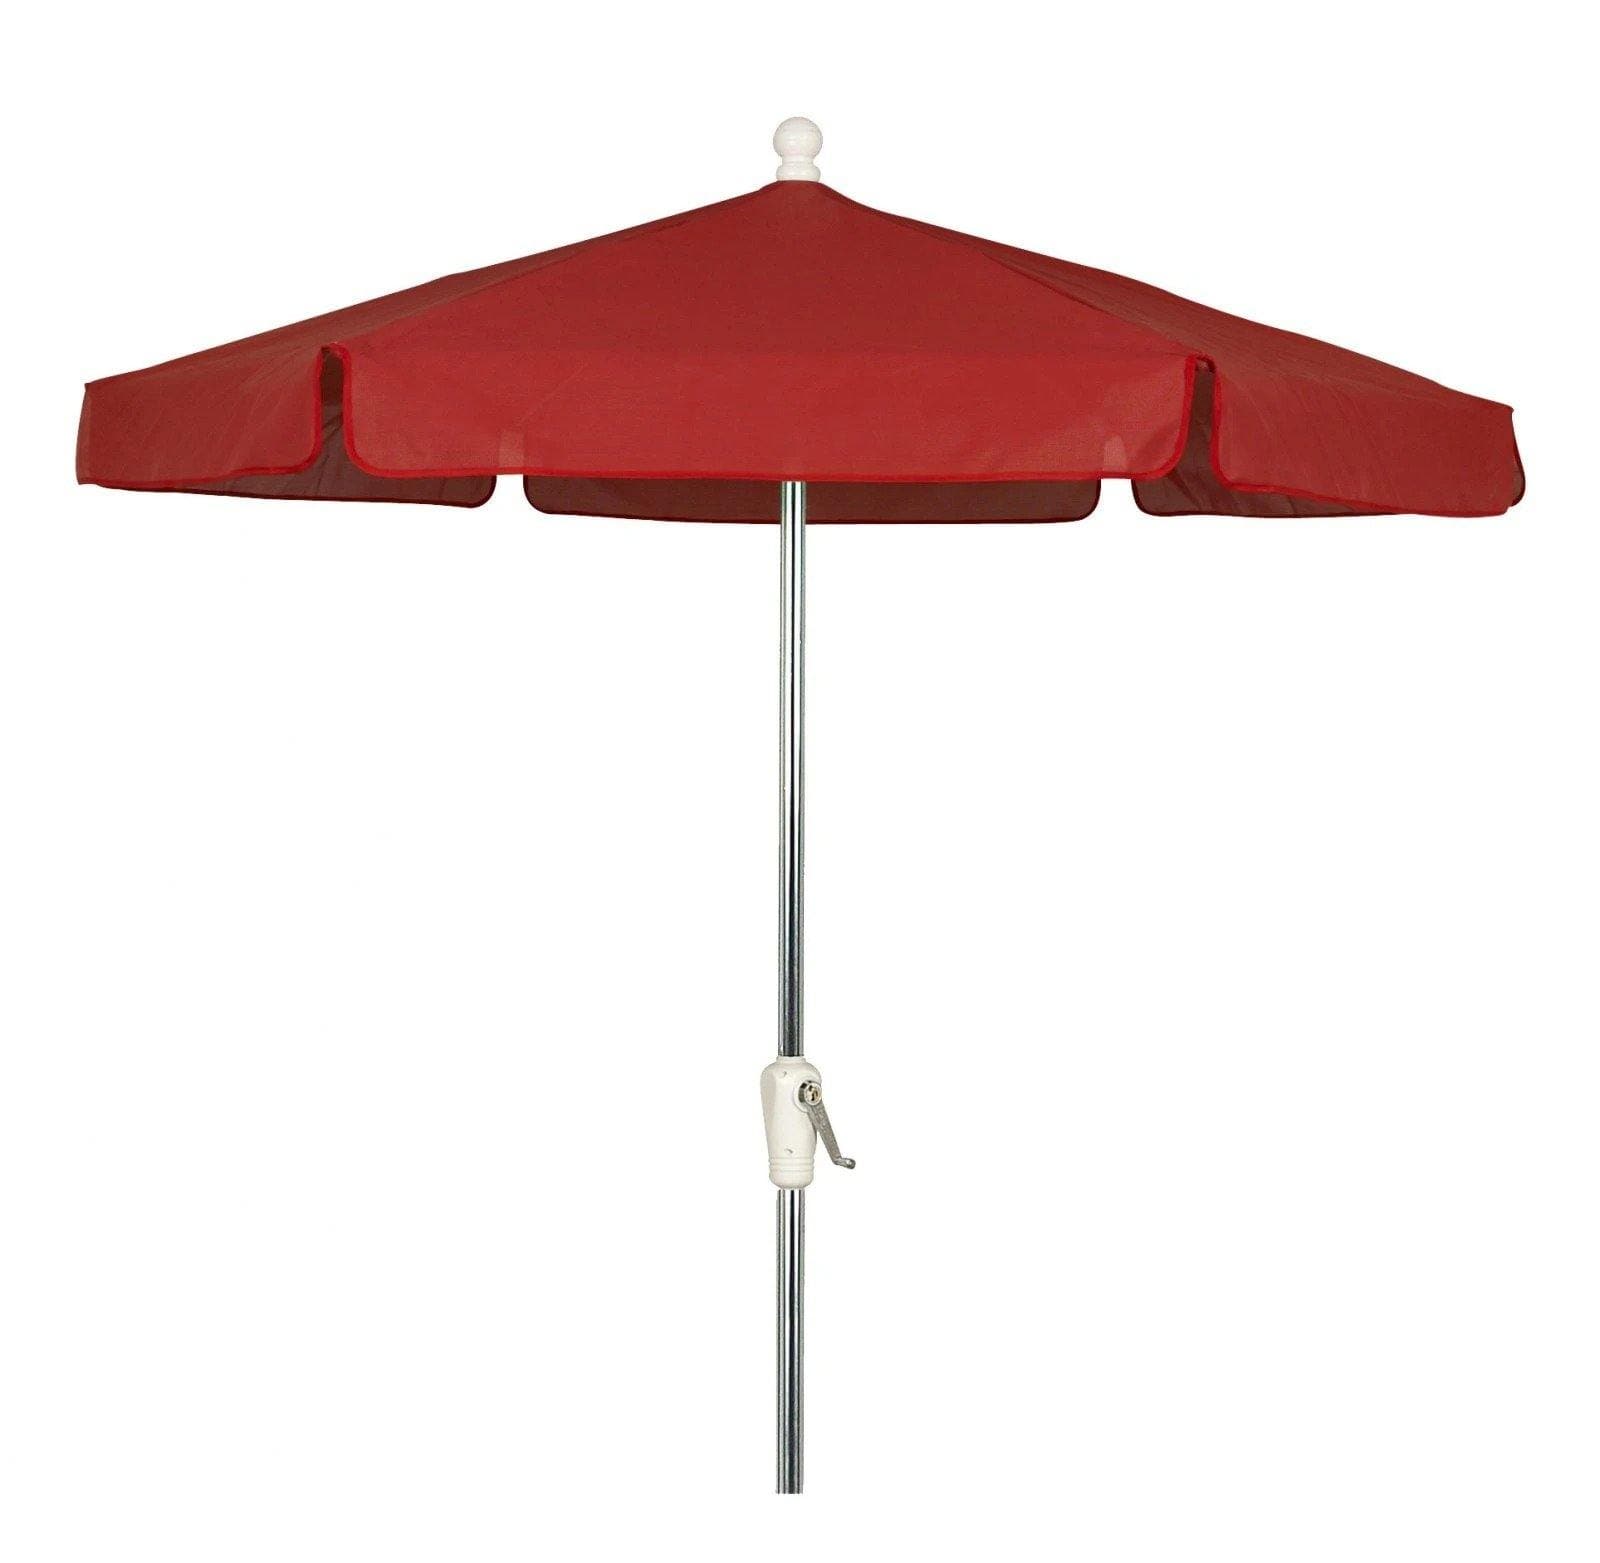 Fiberbuilt Table Umbrellas Red 7.5' Hex Garden Umbrella 6 Rib Push Up Champagne Bronze wit Vinyl Coated Weave Canopy